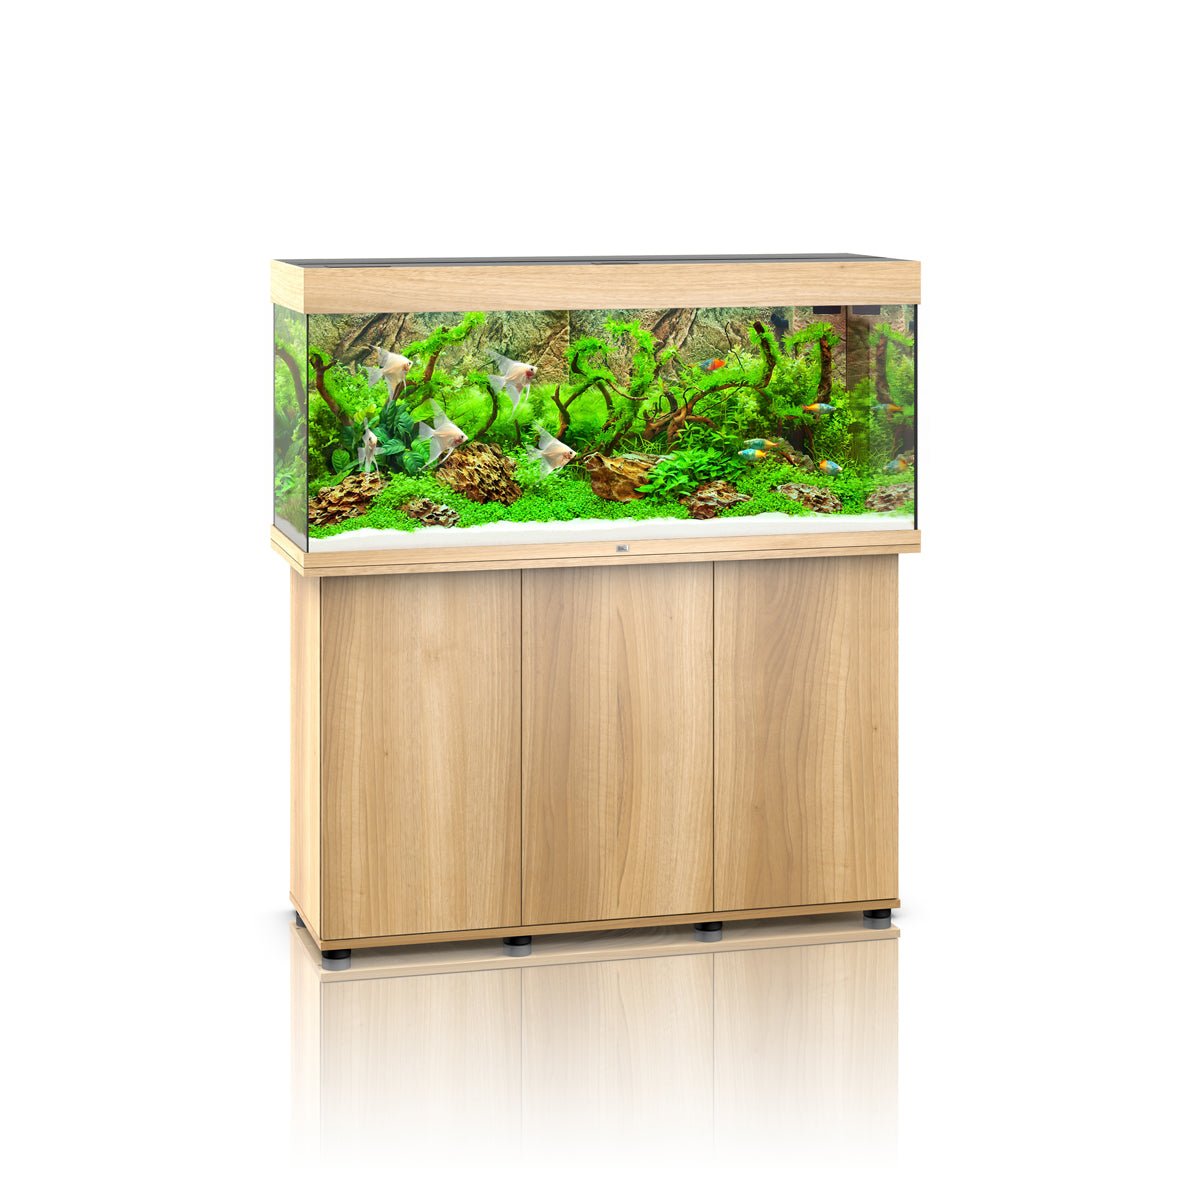 Juwel Rio 240 LED Aquarium and Cabinet (Light Wood) - Charterhouse Aquatics